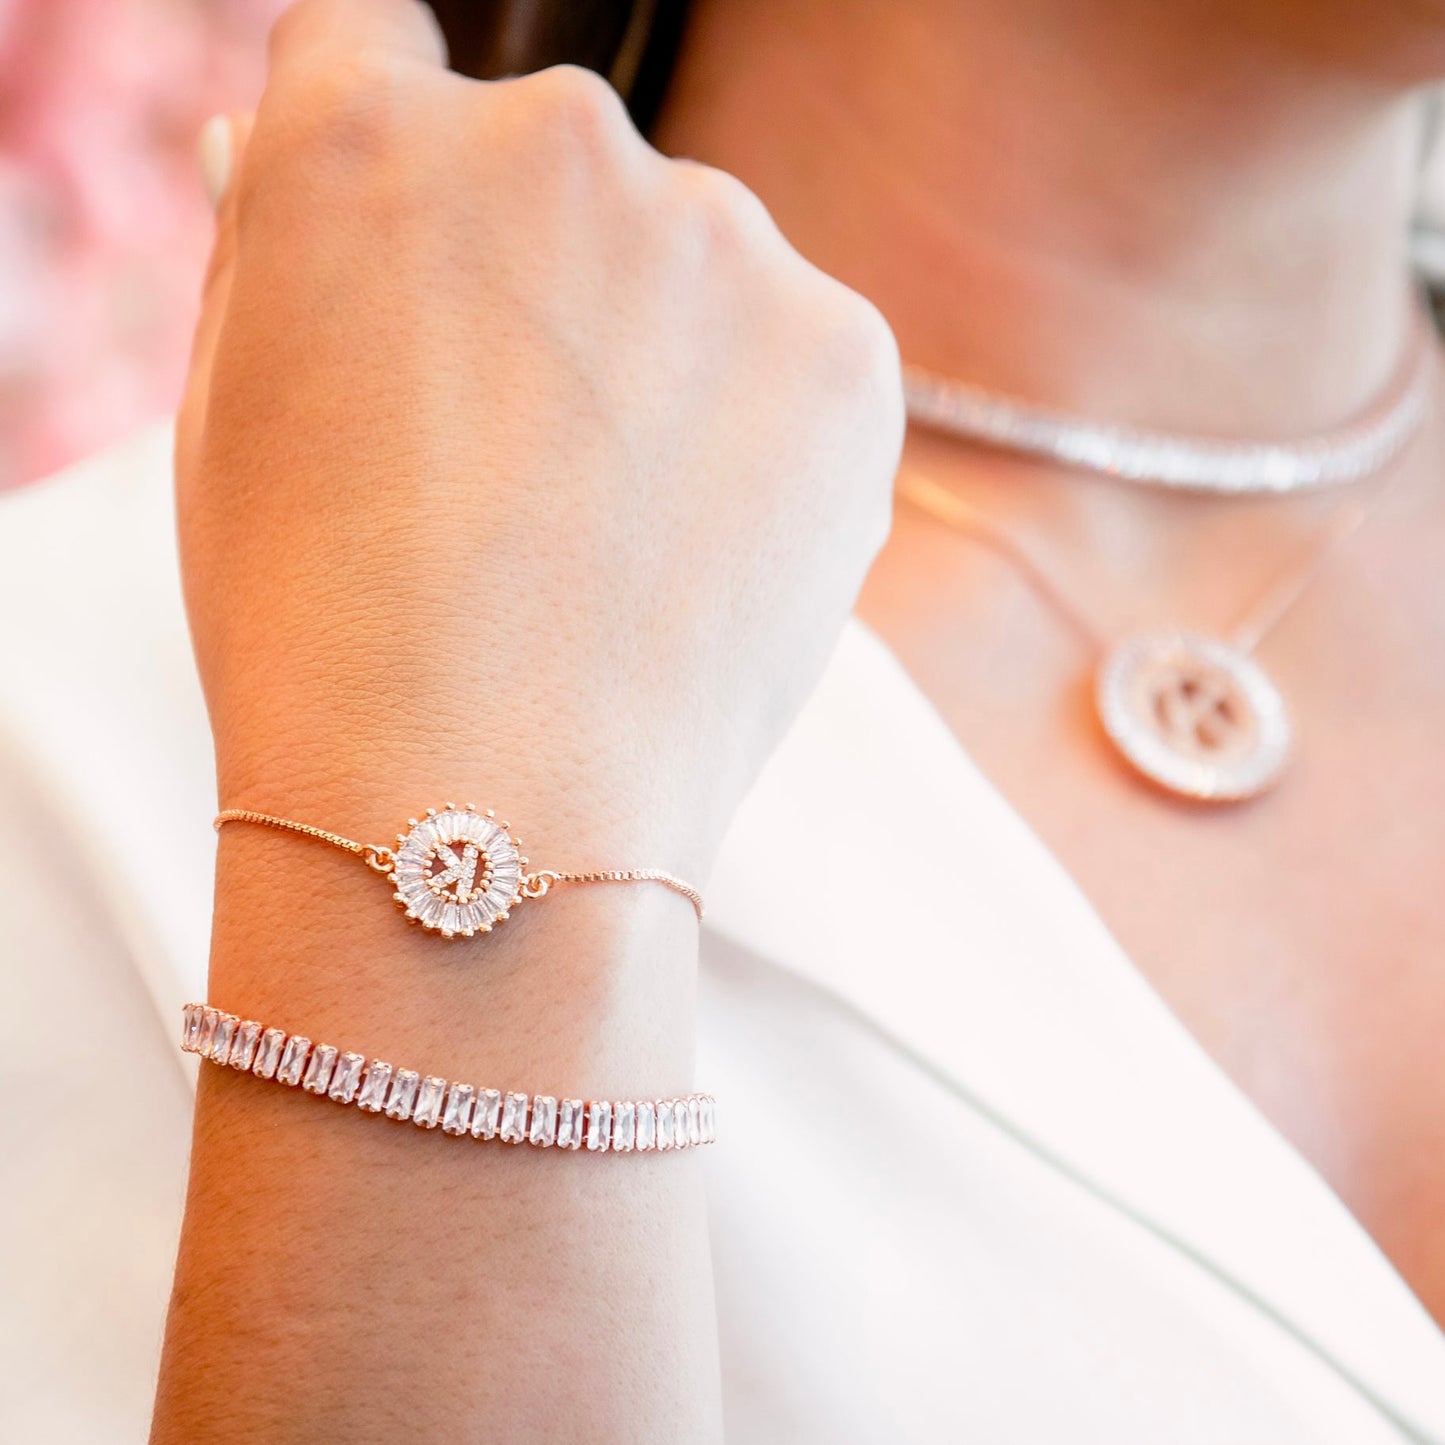 New Mandala Letter Bracelet A - Z | ROSE GOLD PLATED